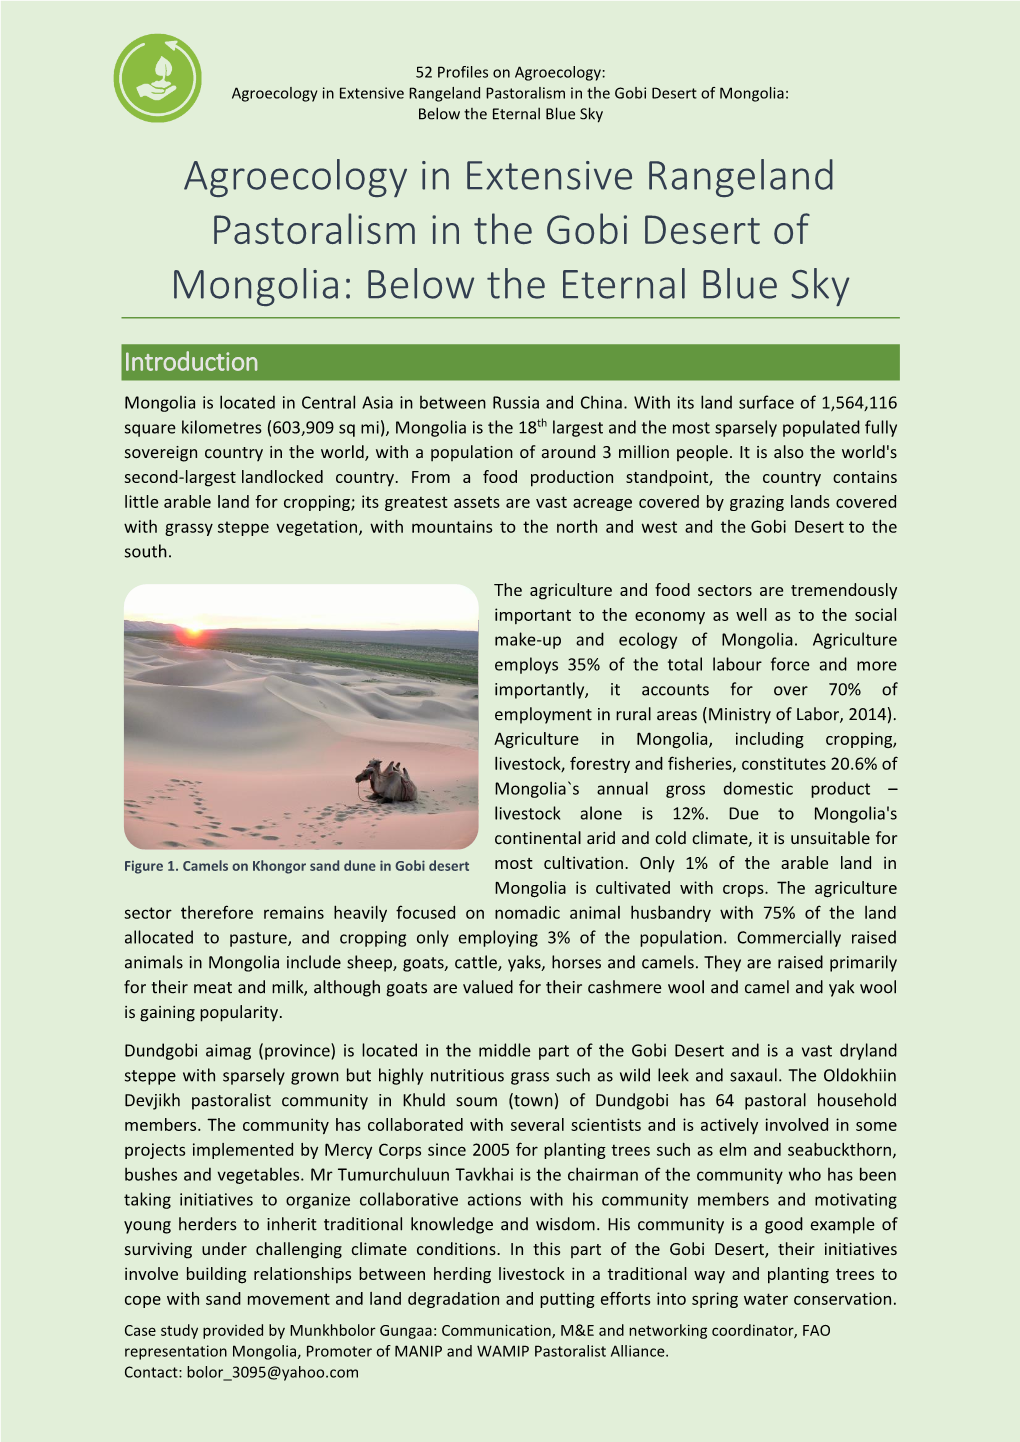 Agroecology in Extensive Rangeland Pastoralism in the Gobi Desert of Mongolia: Below the Eternal Blue Sky